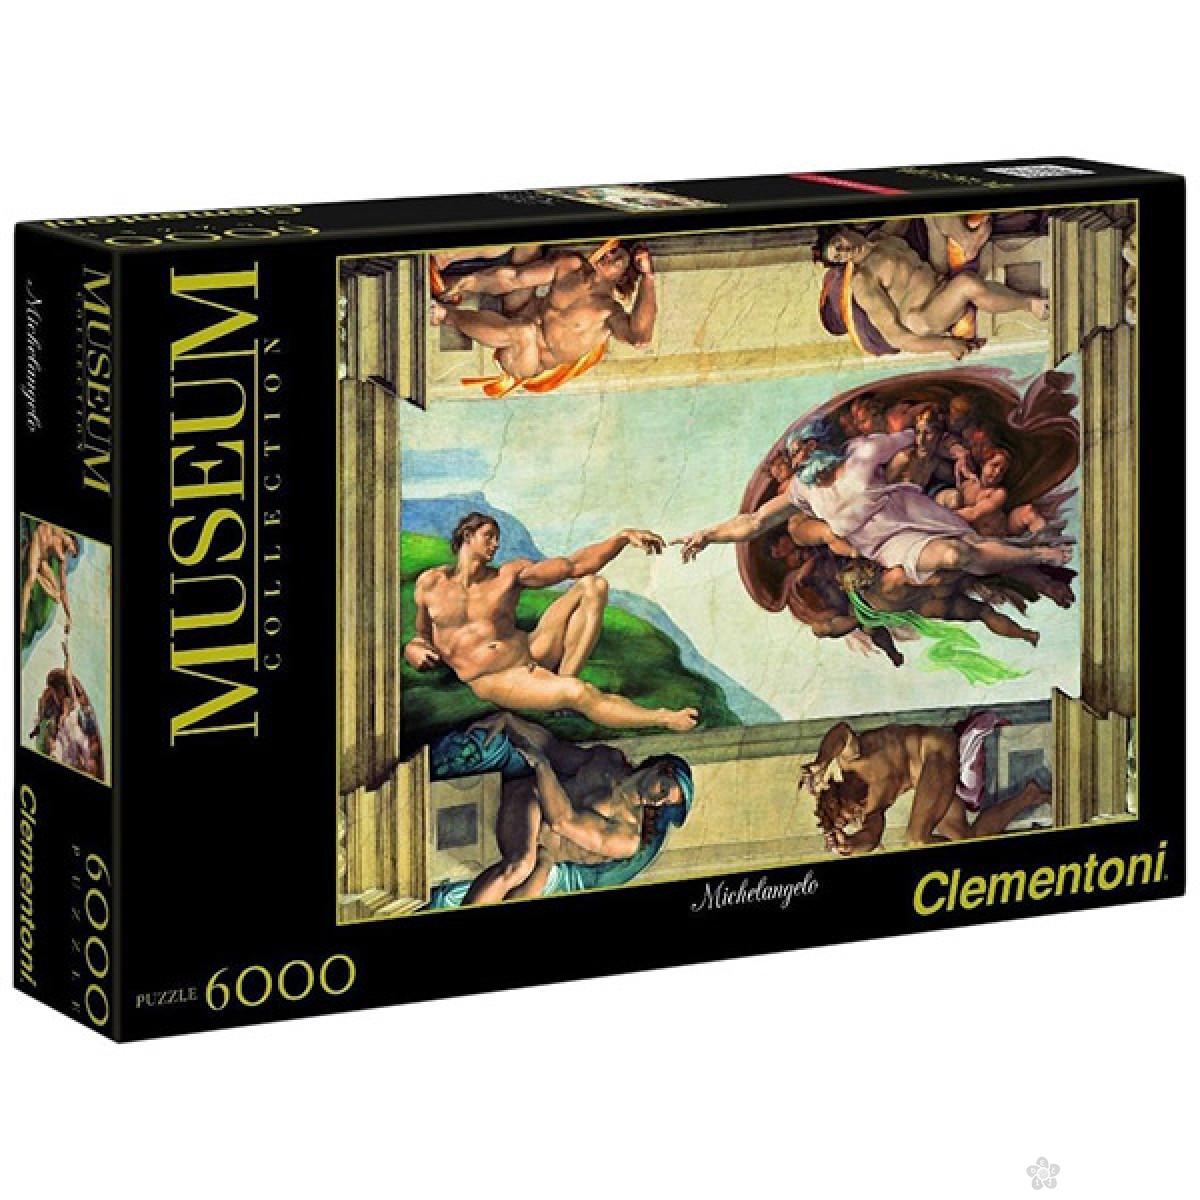 Puzzla The Creation of Man, Michelangelo 6000 pcs, 36513 